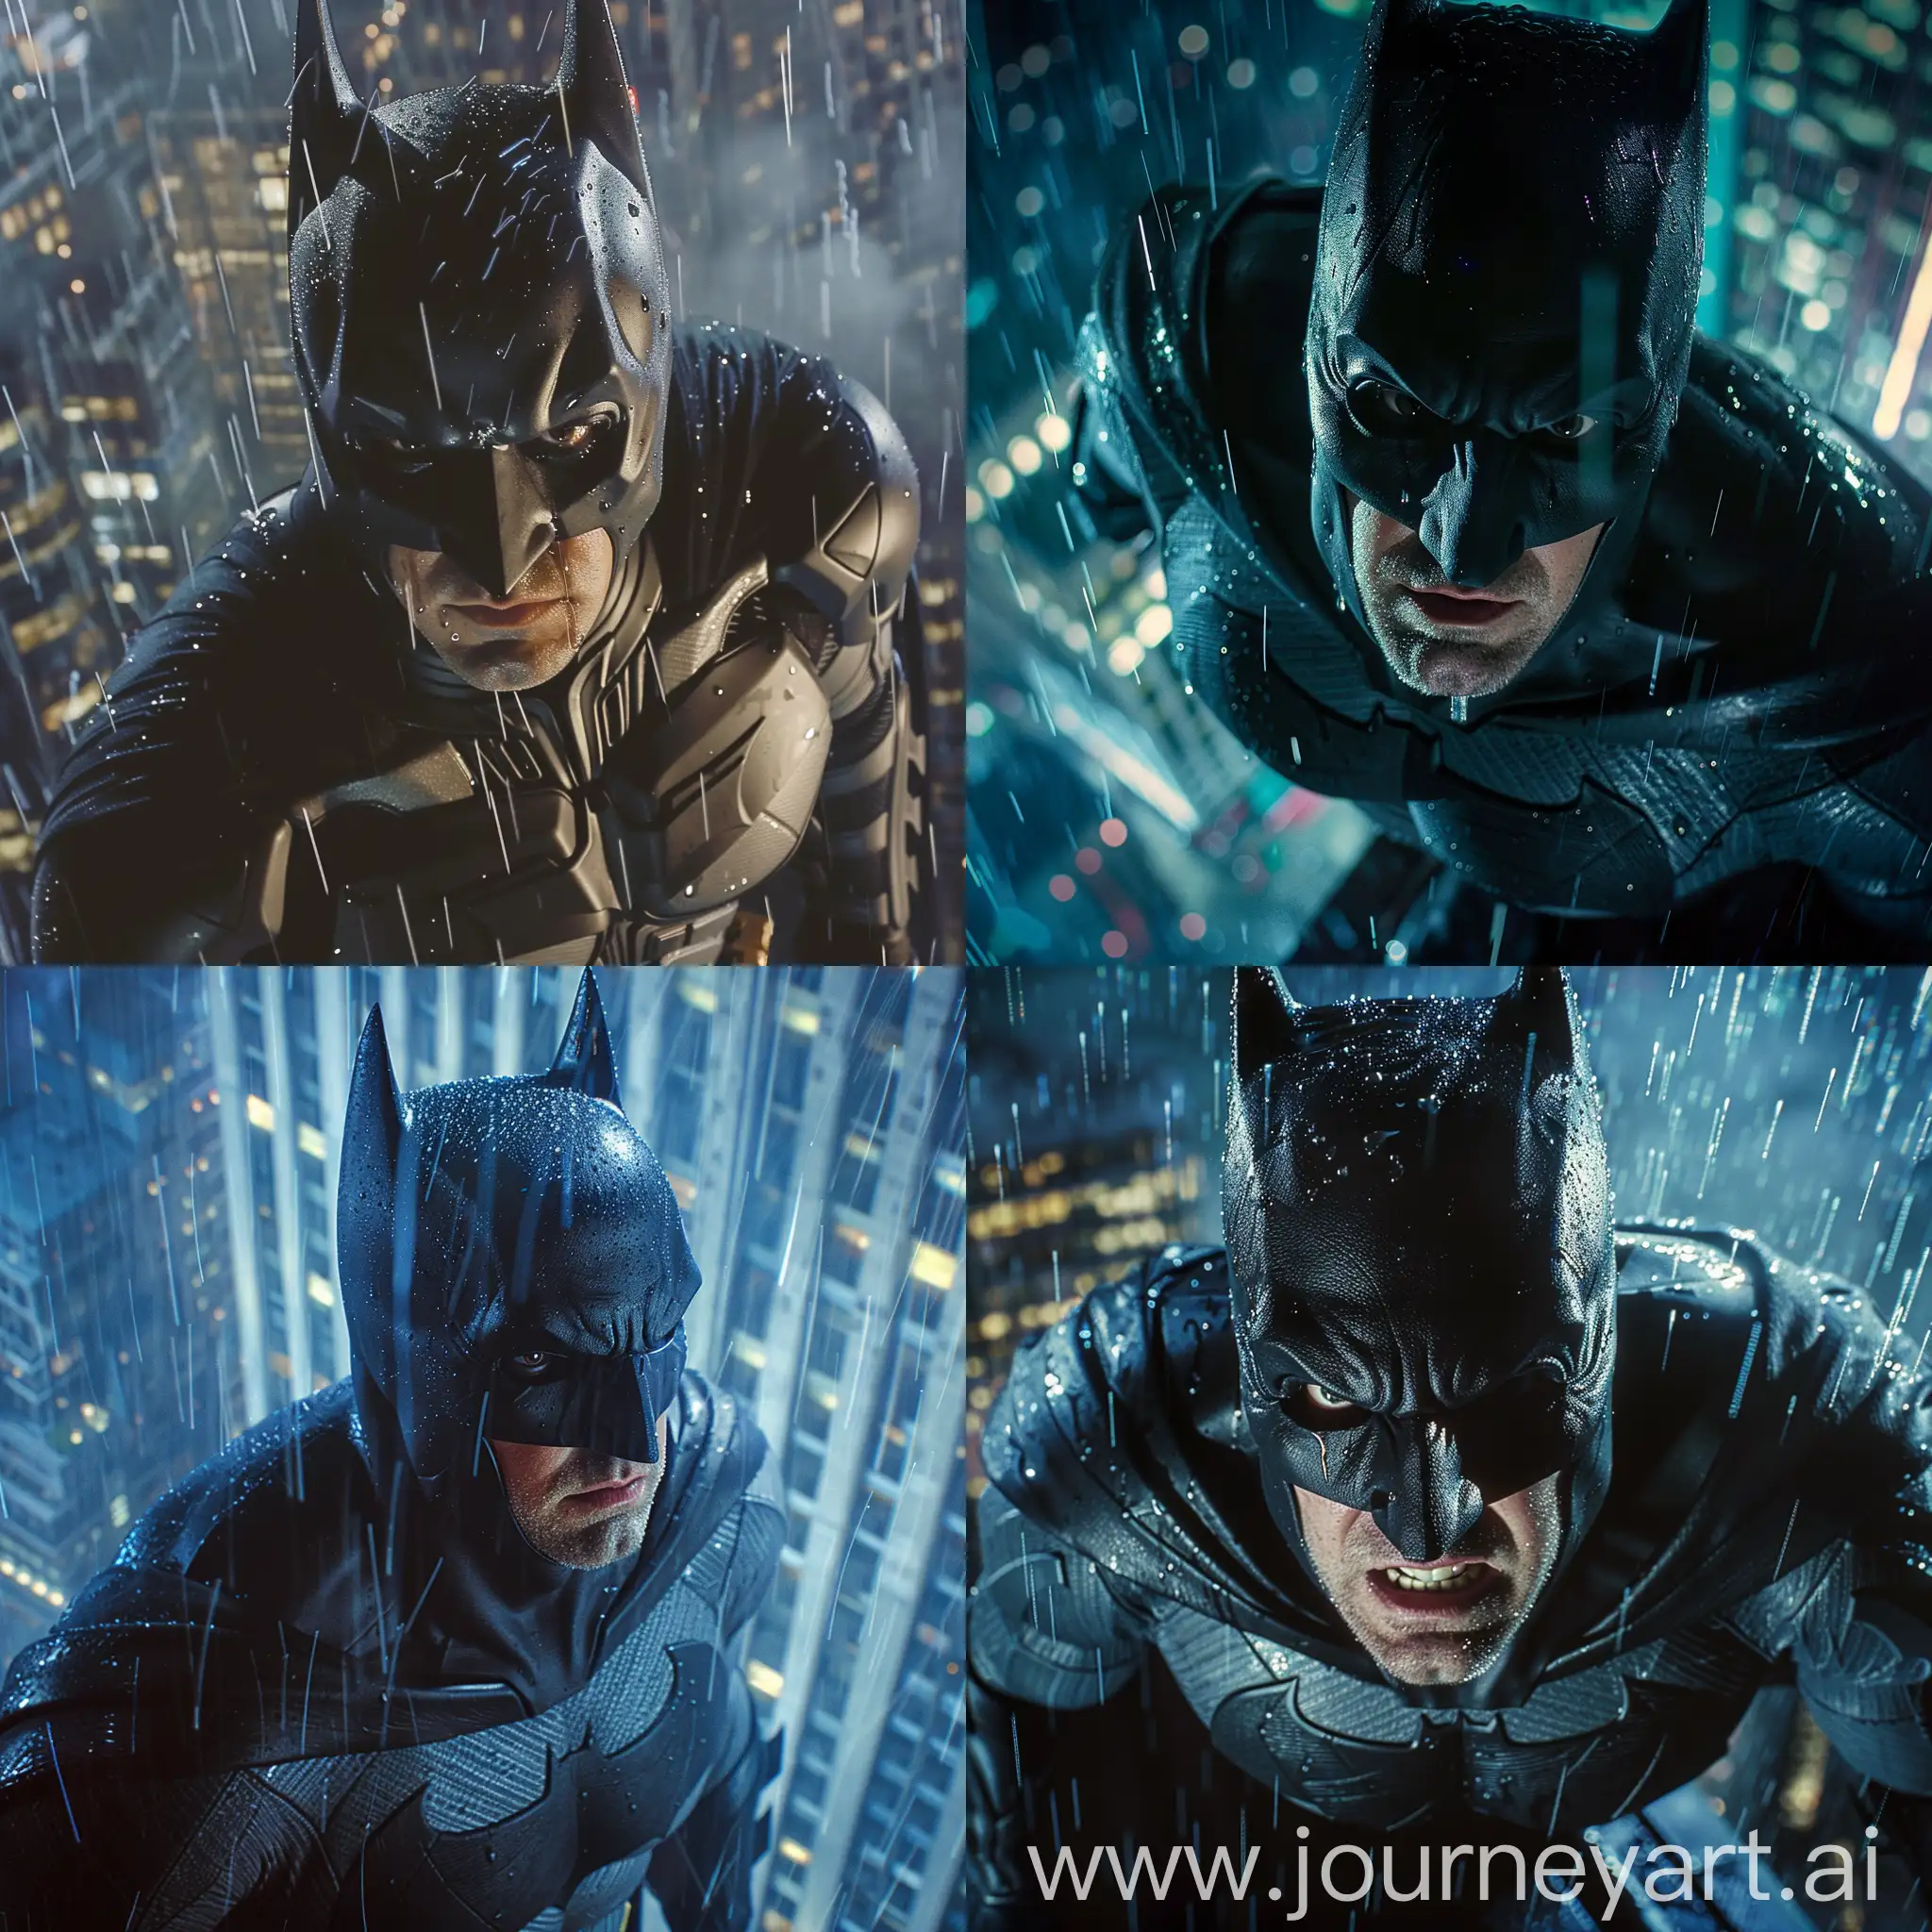 Batman-Brooding-on-Rainy-Skyscraper-in-Cinematic-CloseUp